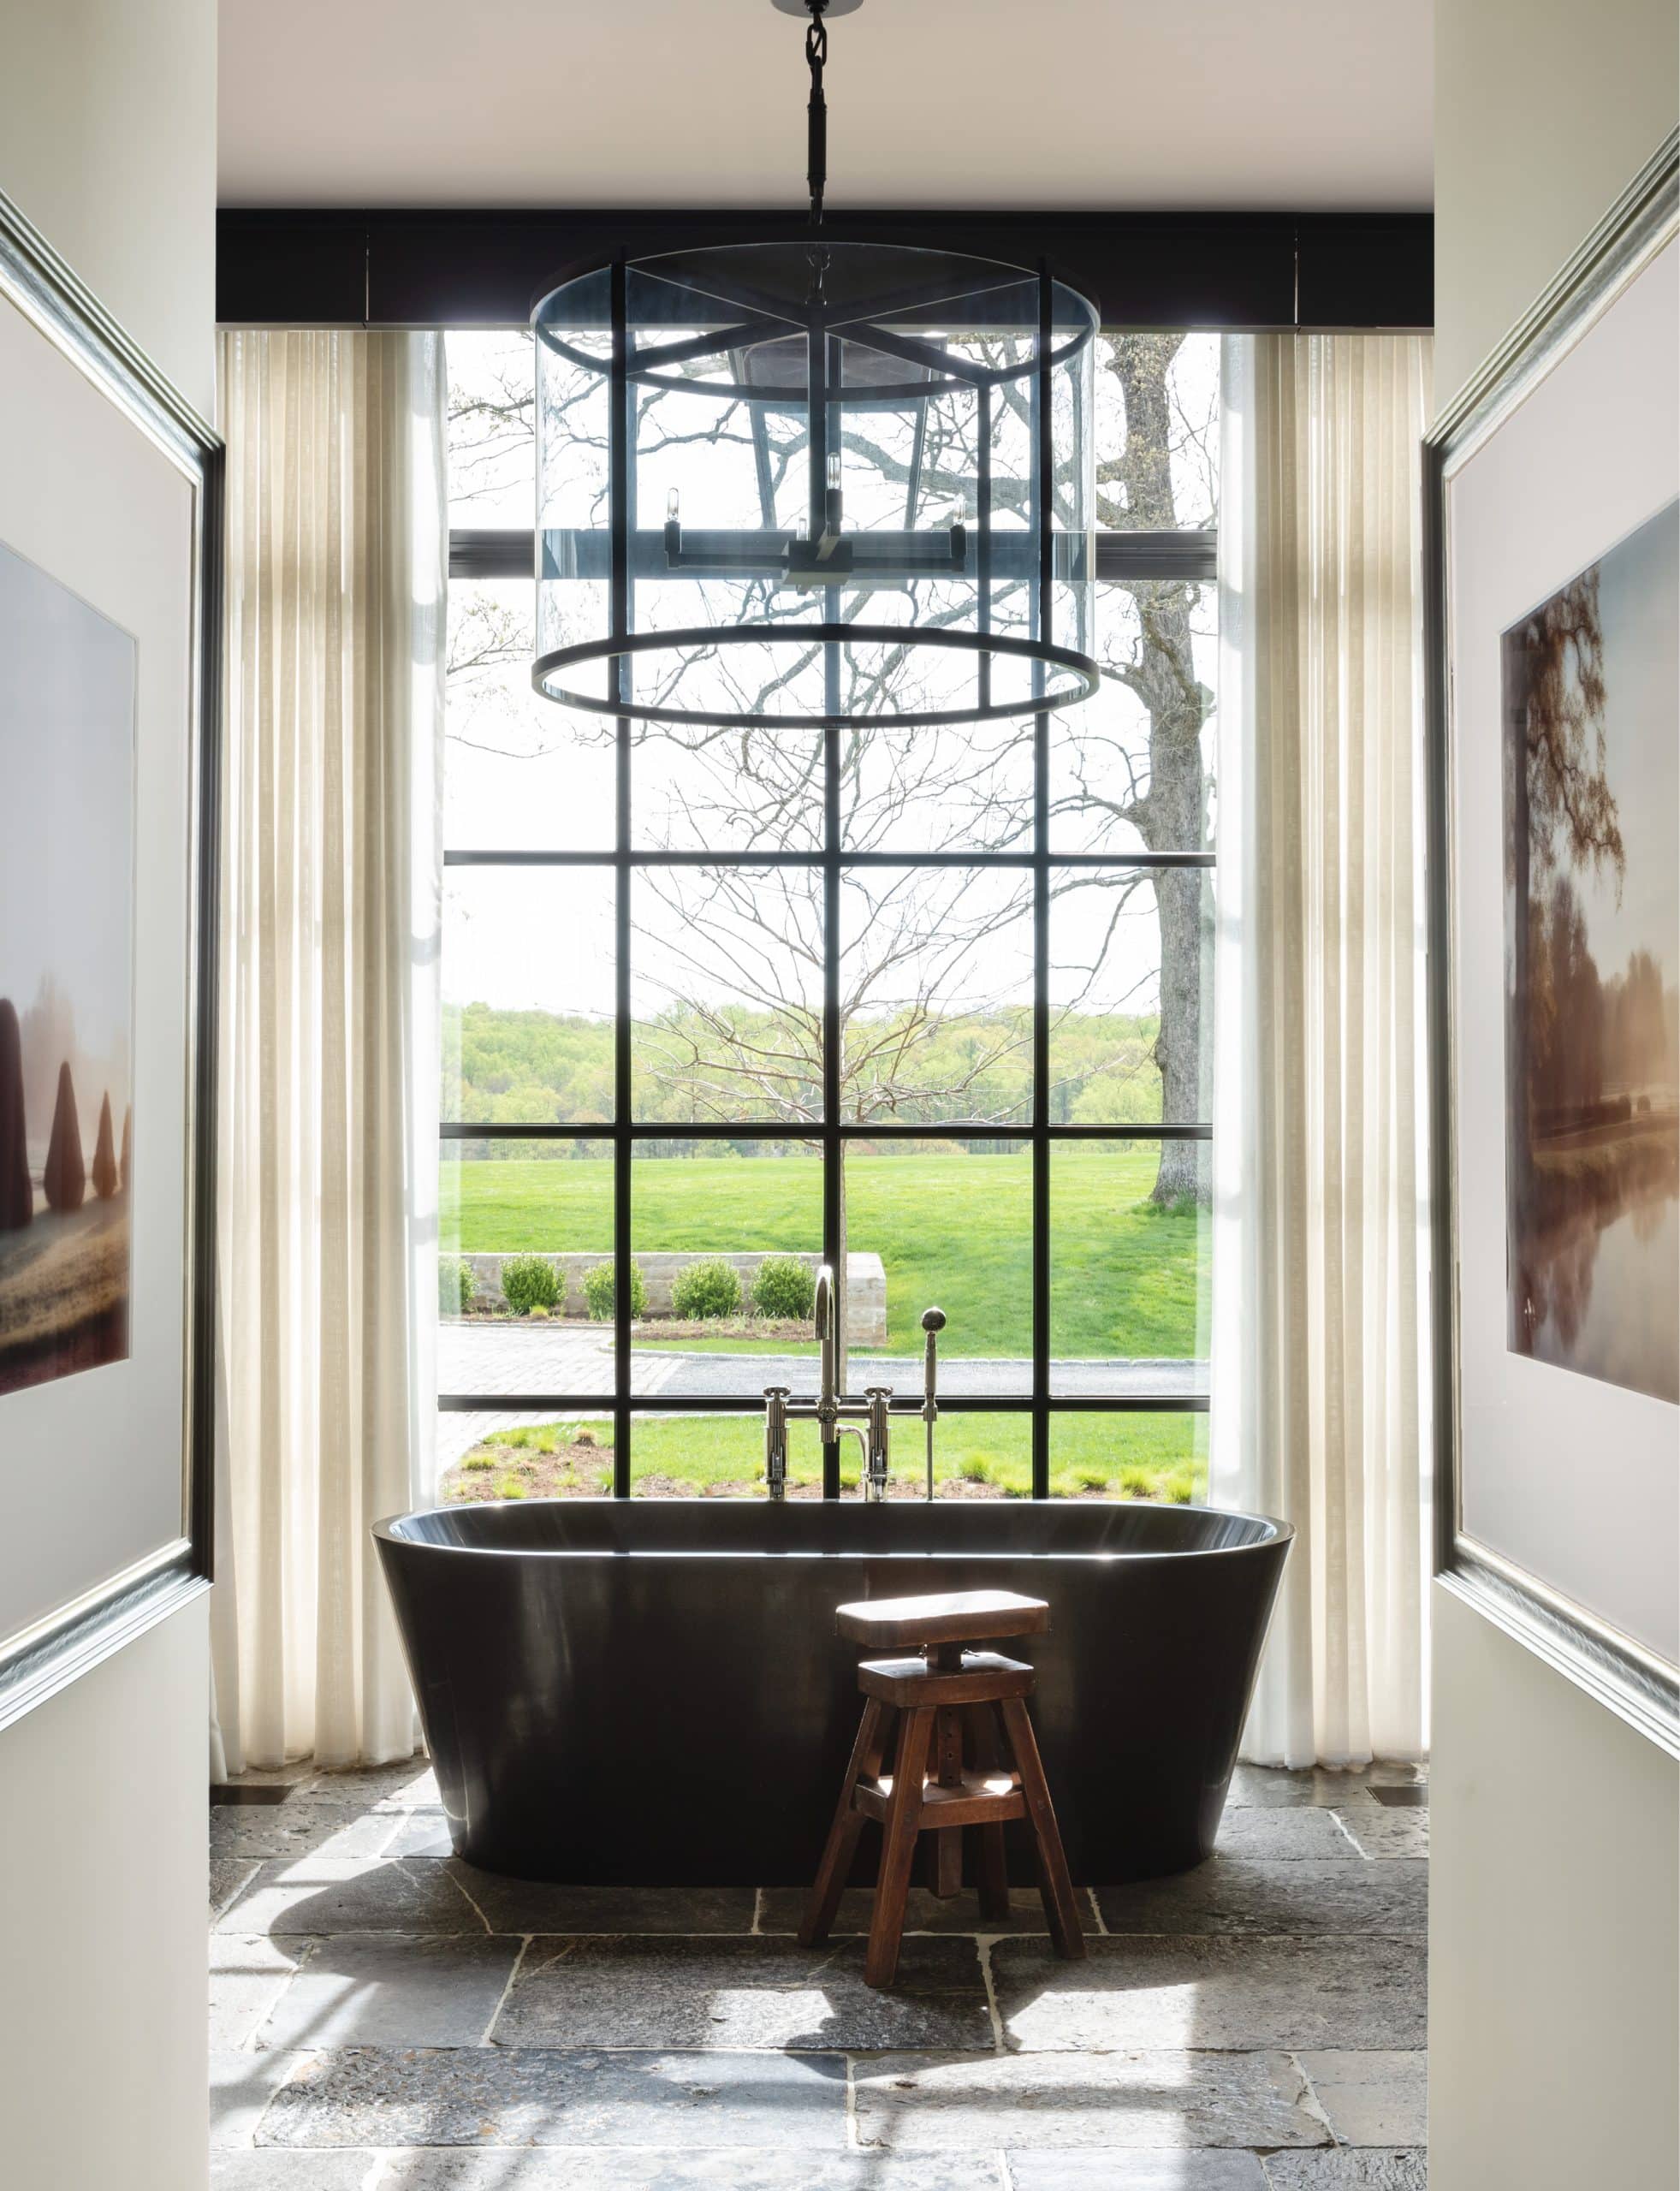 Barbara Sallick Rizzoli book The Ultimate Bath interior designer Susan Ferrier architecture McAlpine bathroom